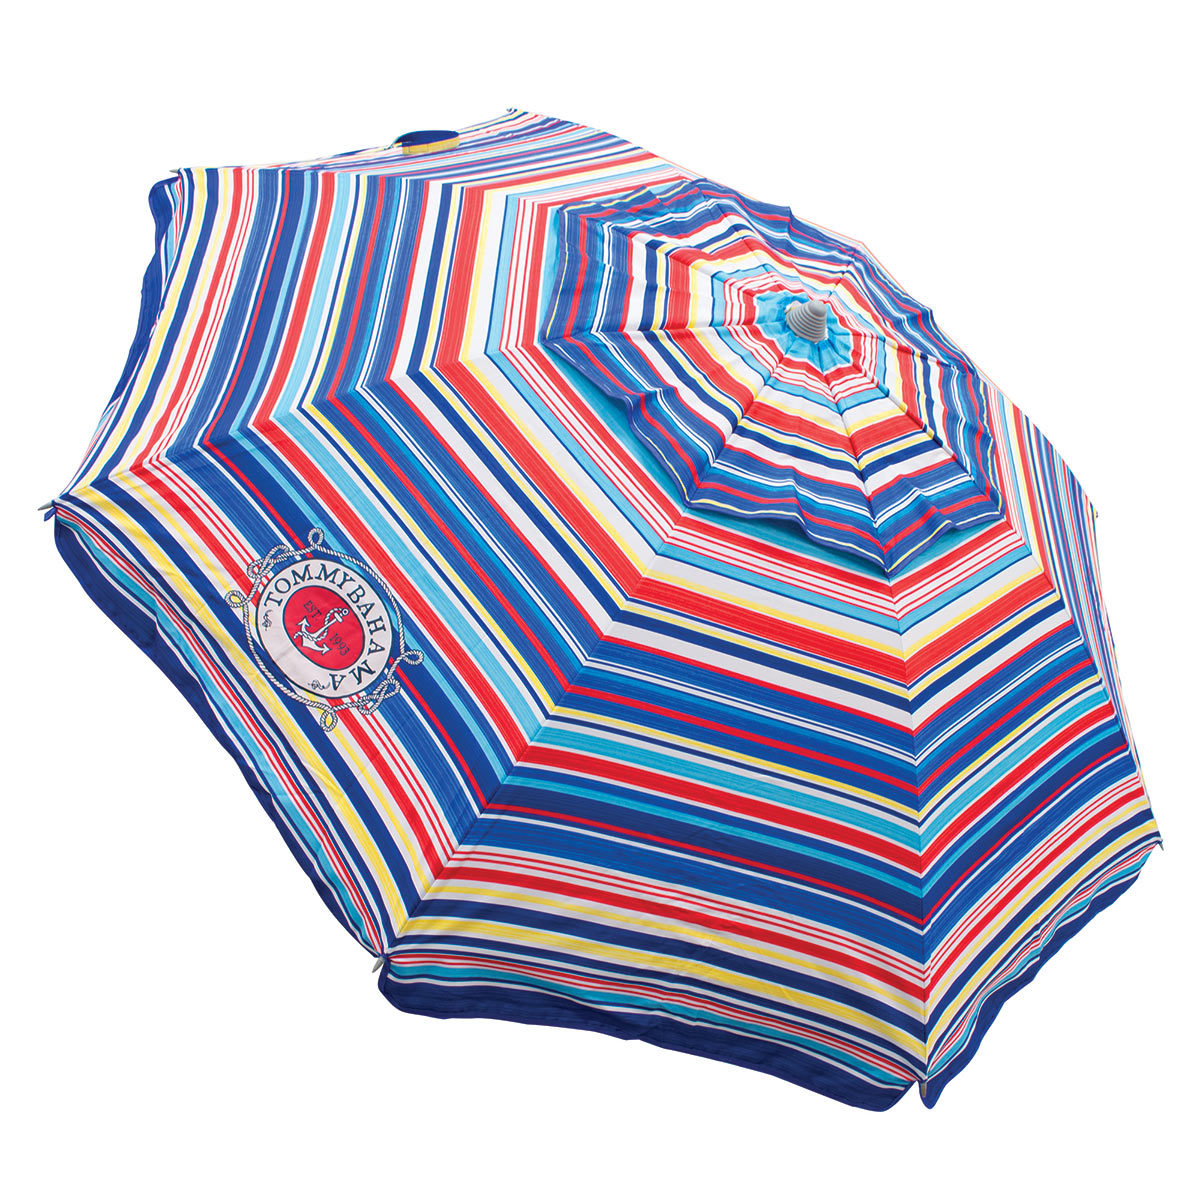 Tommy Bahama 7ft Beach Umbrella in Flip Flop Stripe